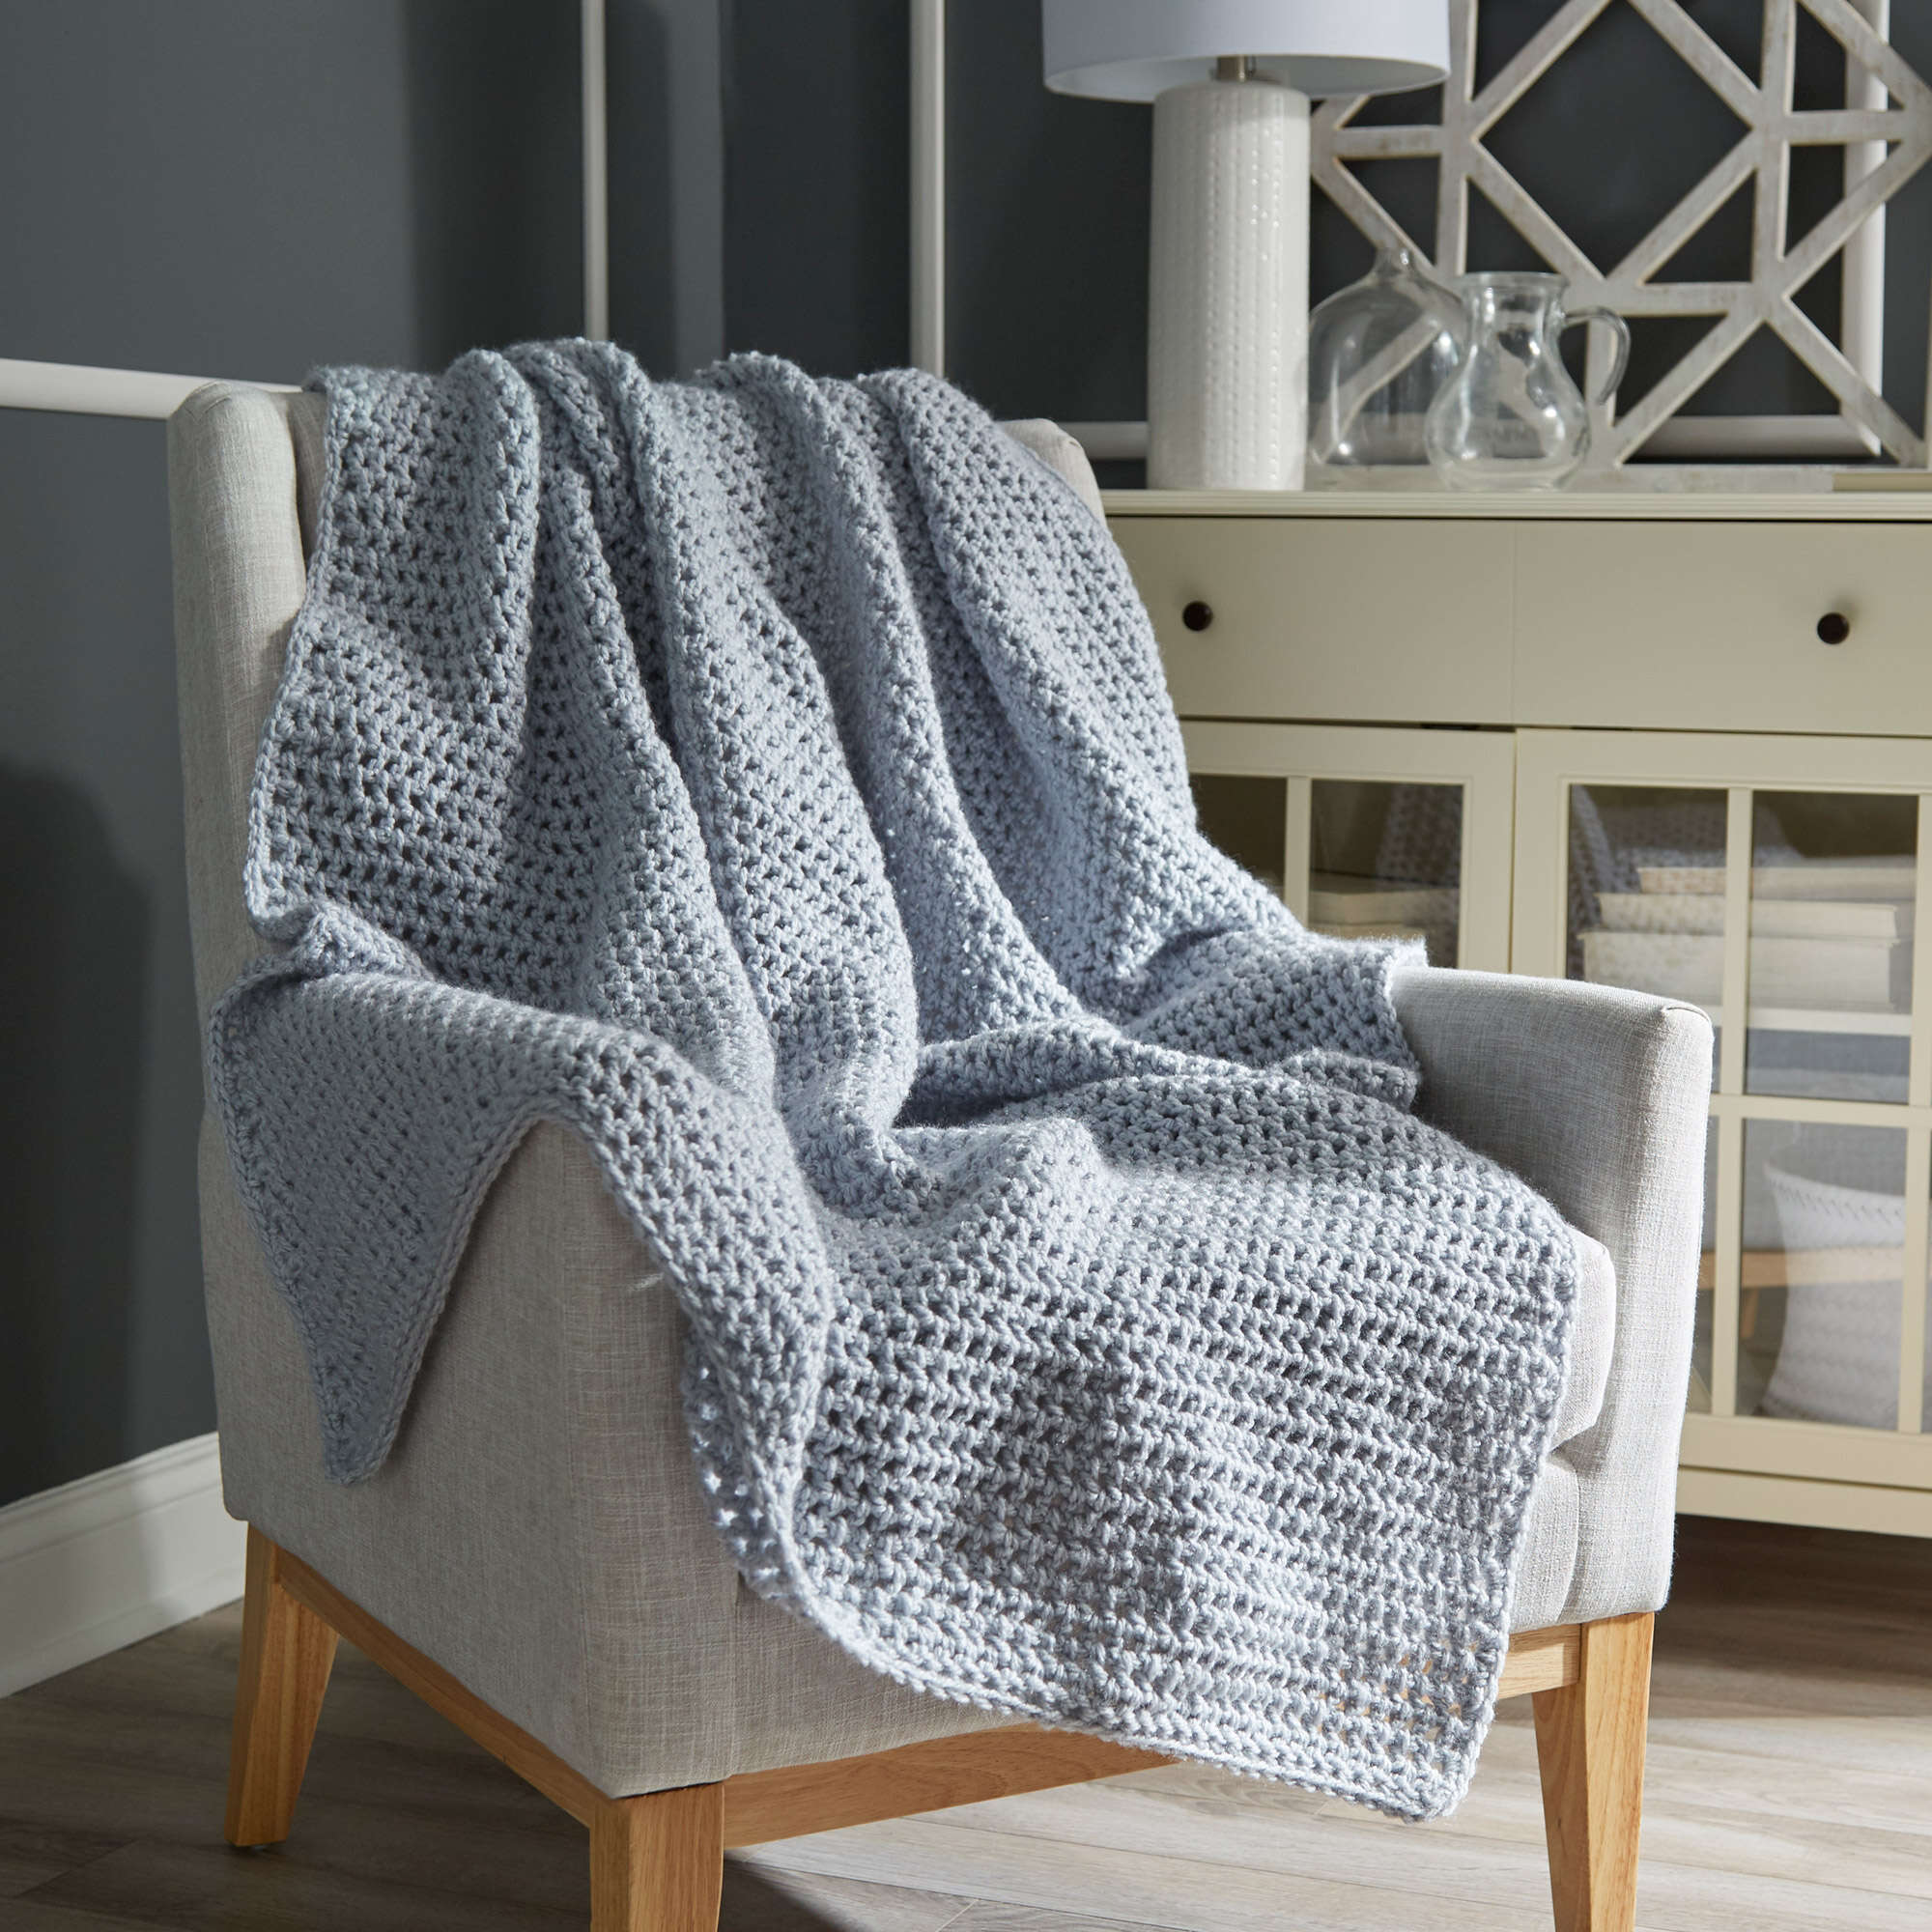 absolute beginner crochet throw blanket draped over a chair. Marly Bird